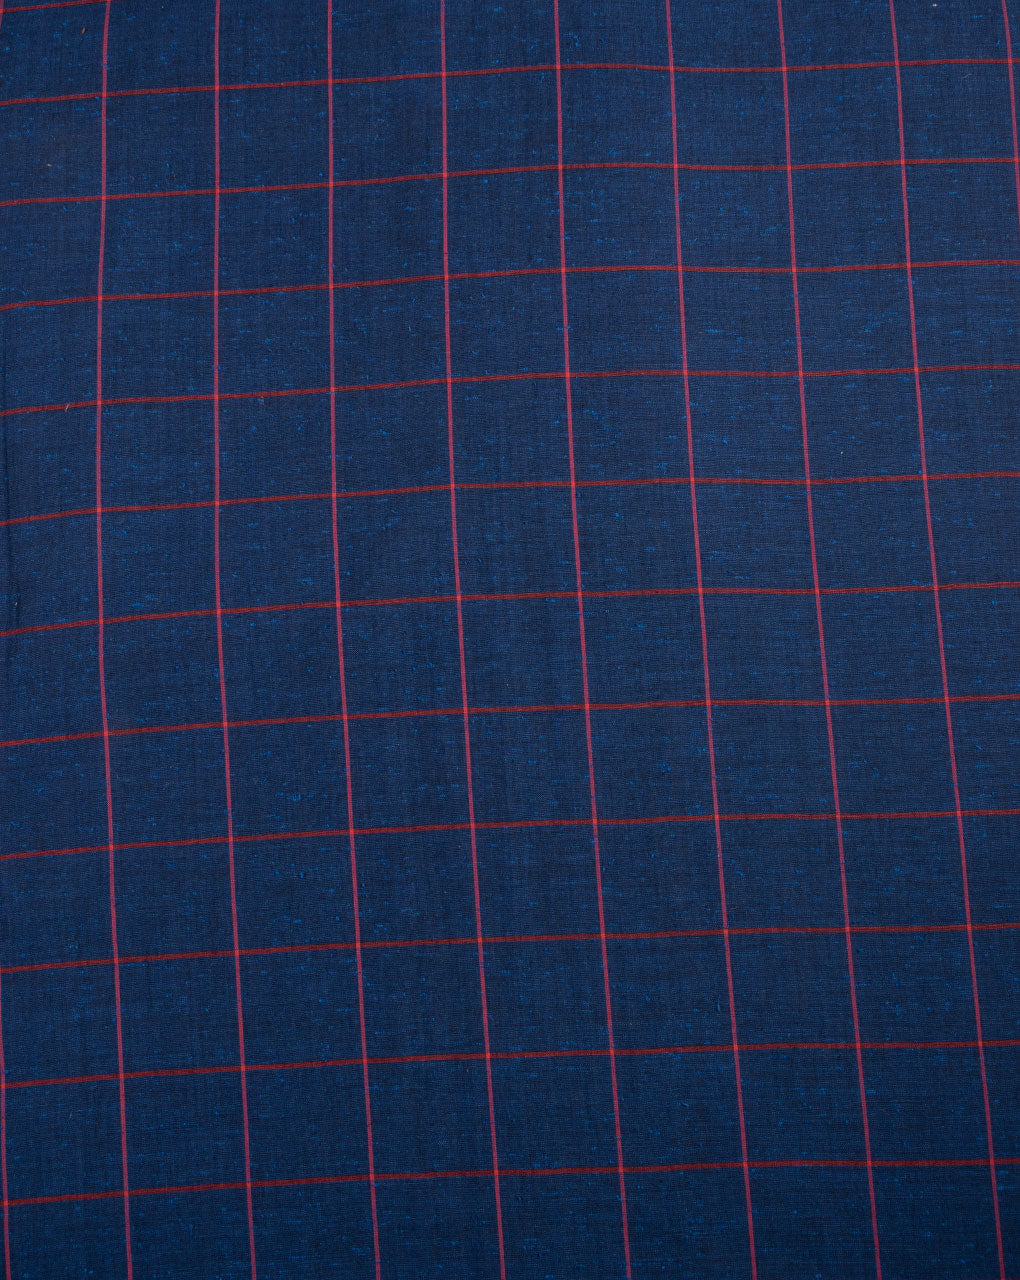 Loom Textured Cotton Fabric - Fabriclore.com